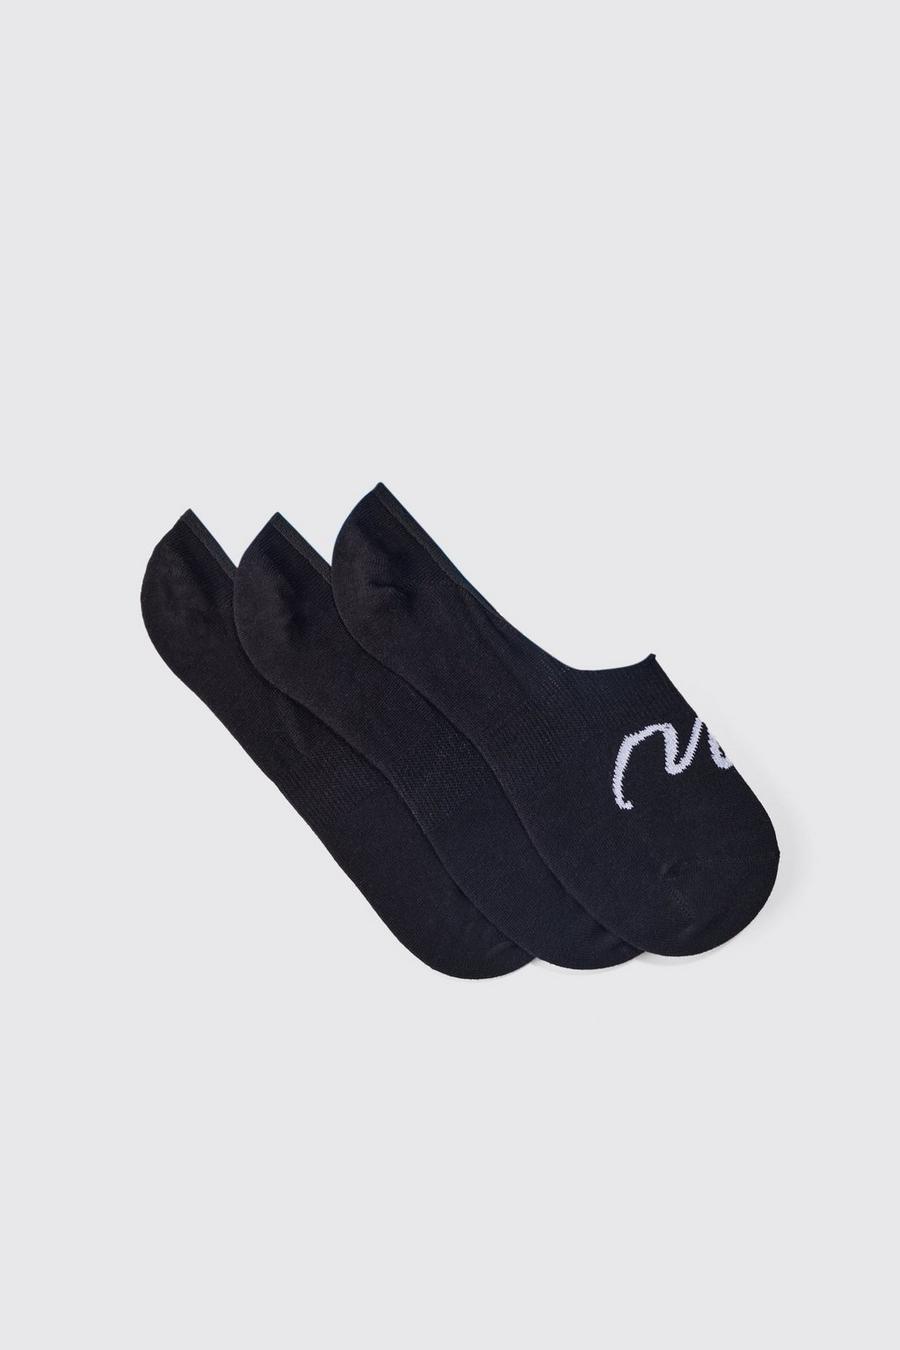 Pack de 3 pares de calcetines invisibles con firma MAN, Black image number 1